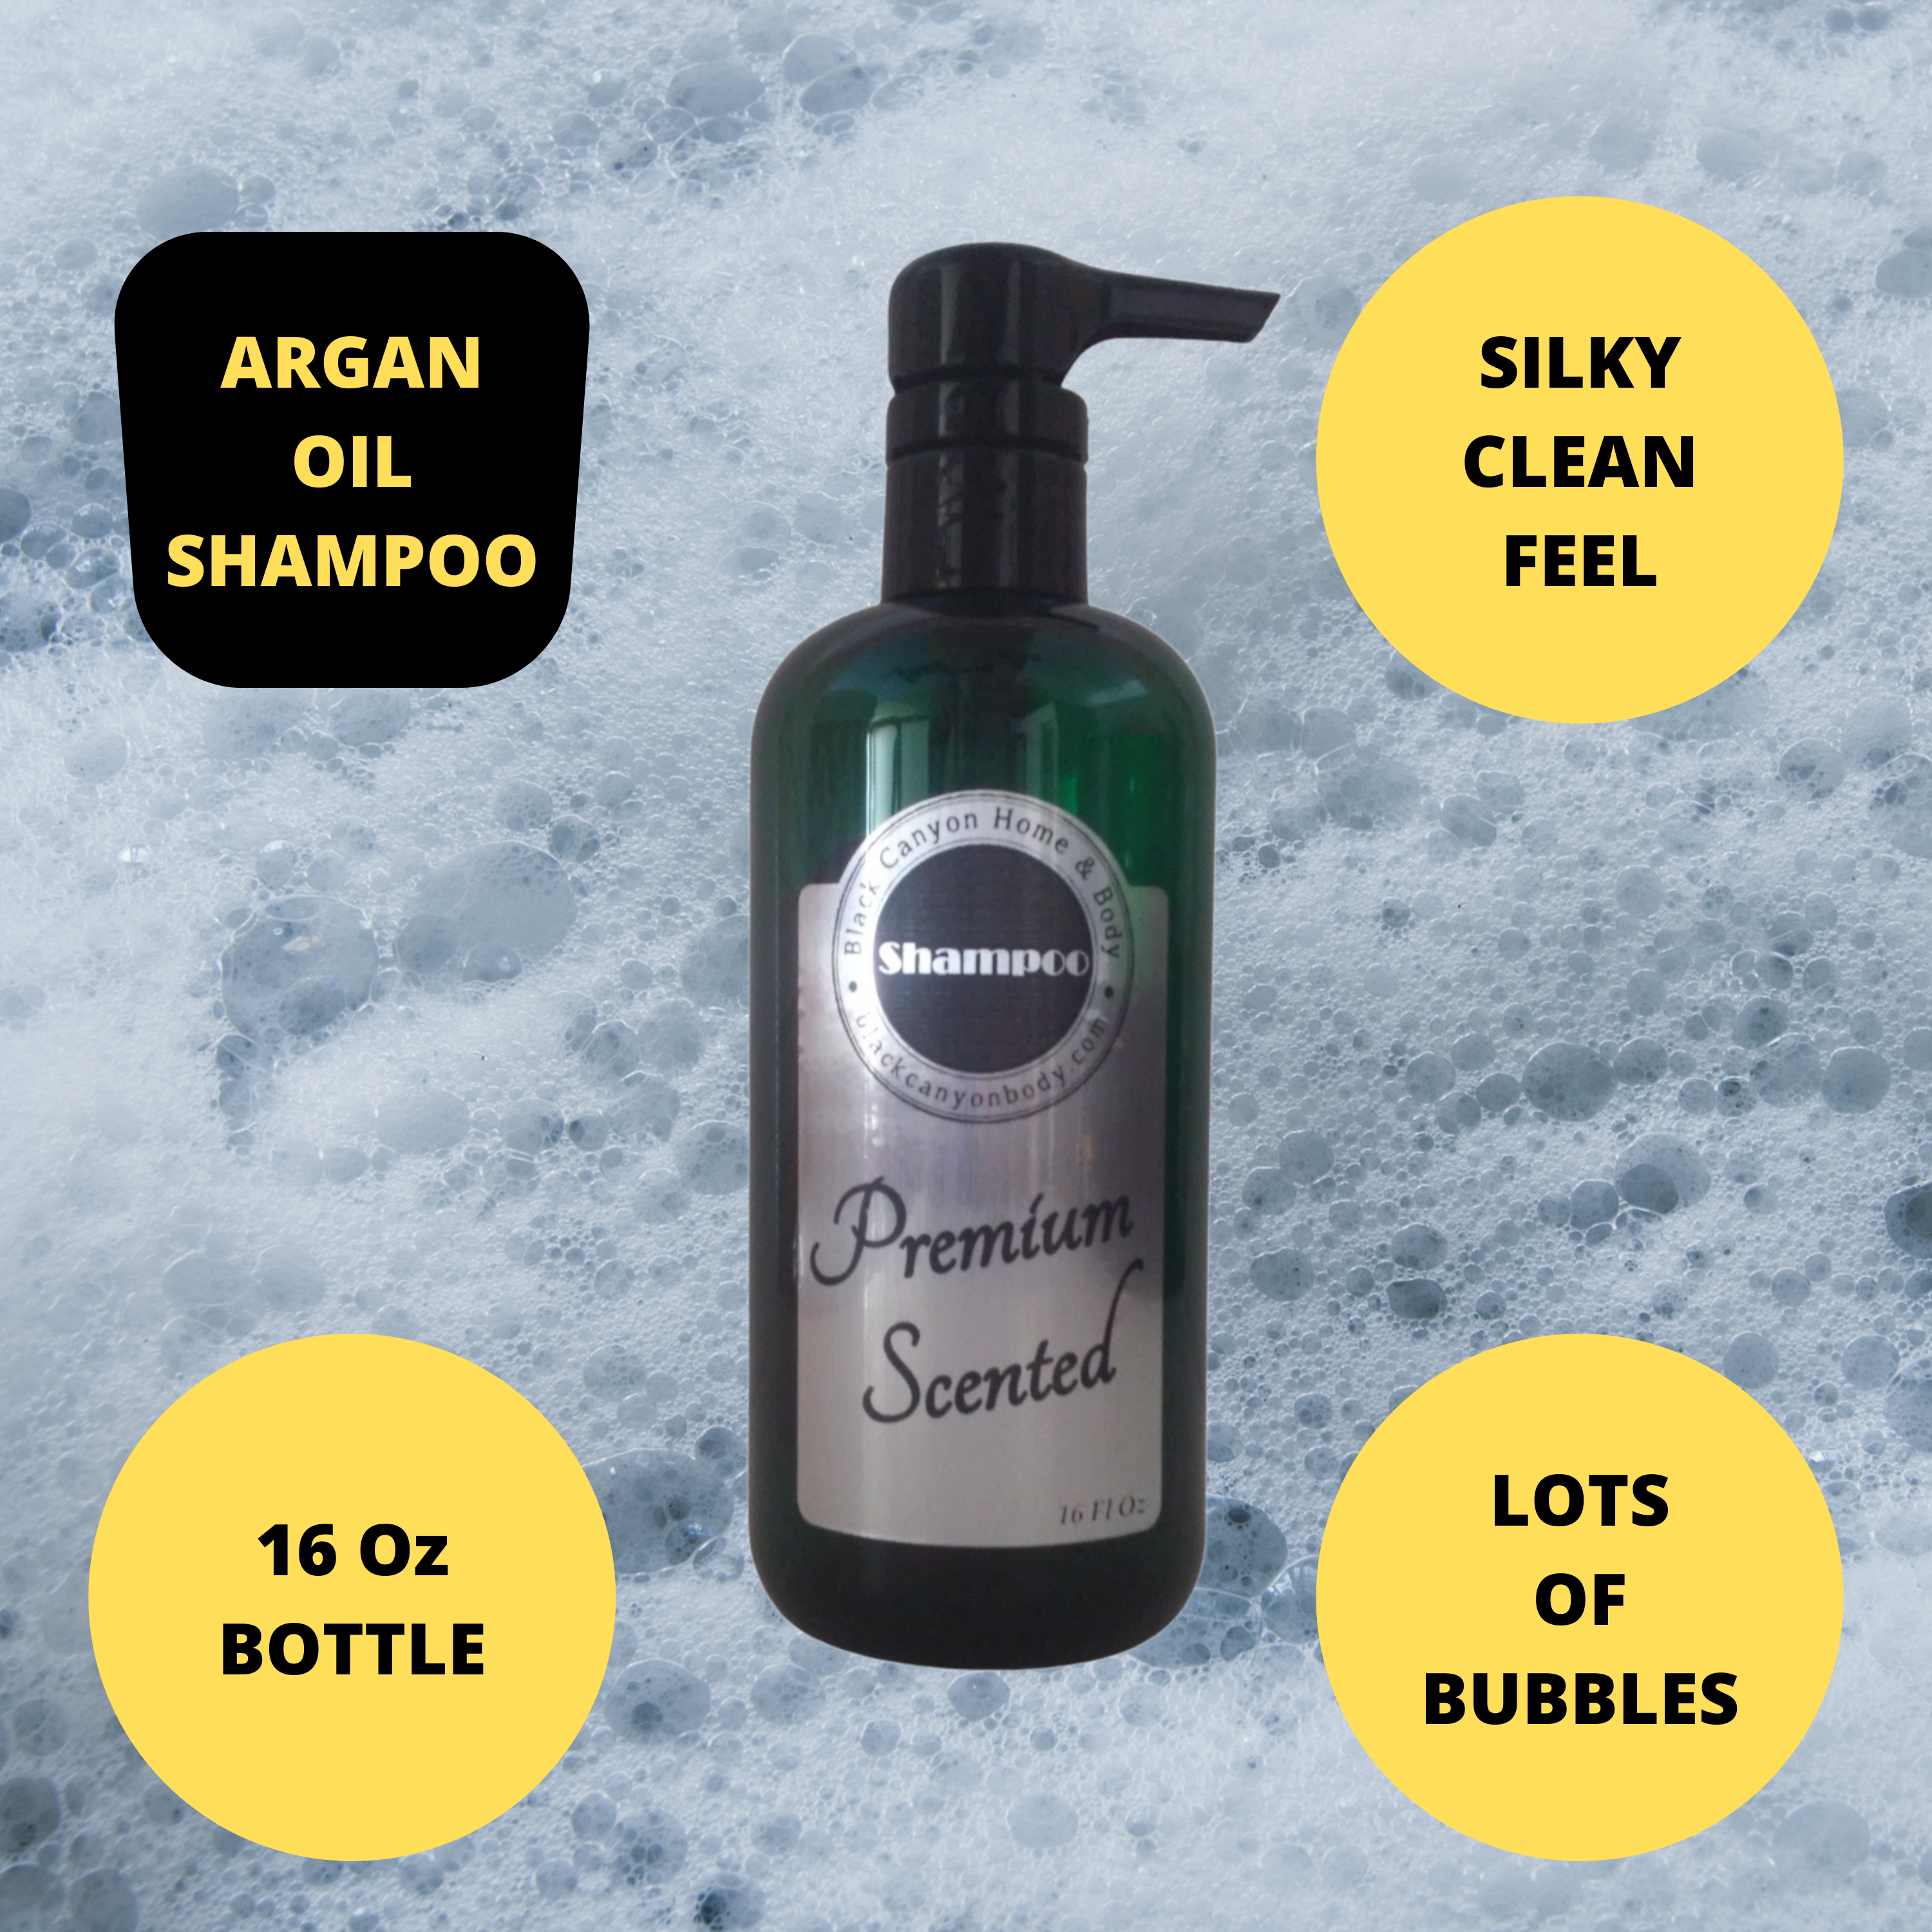 Black Canyon Lemon Mint Scented Shampoo with Argan Oil